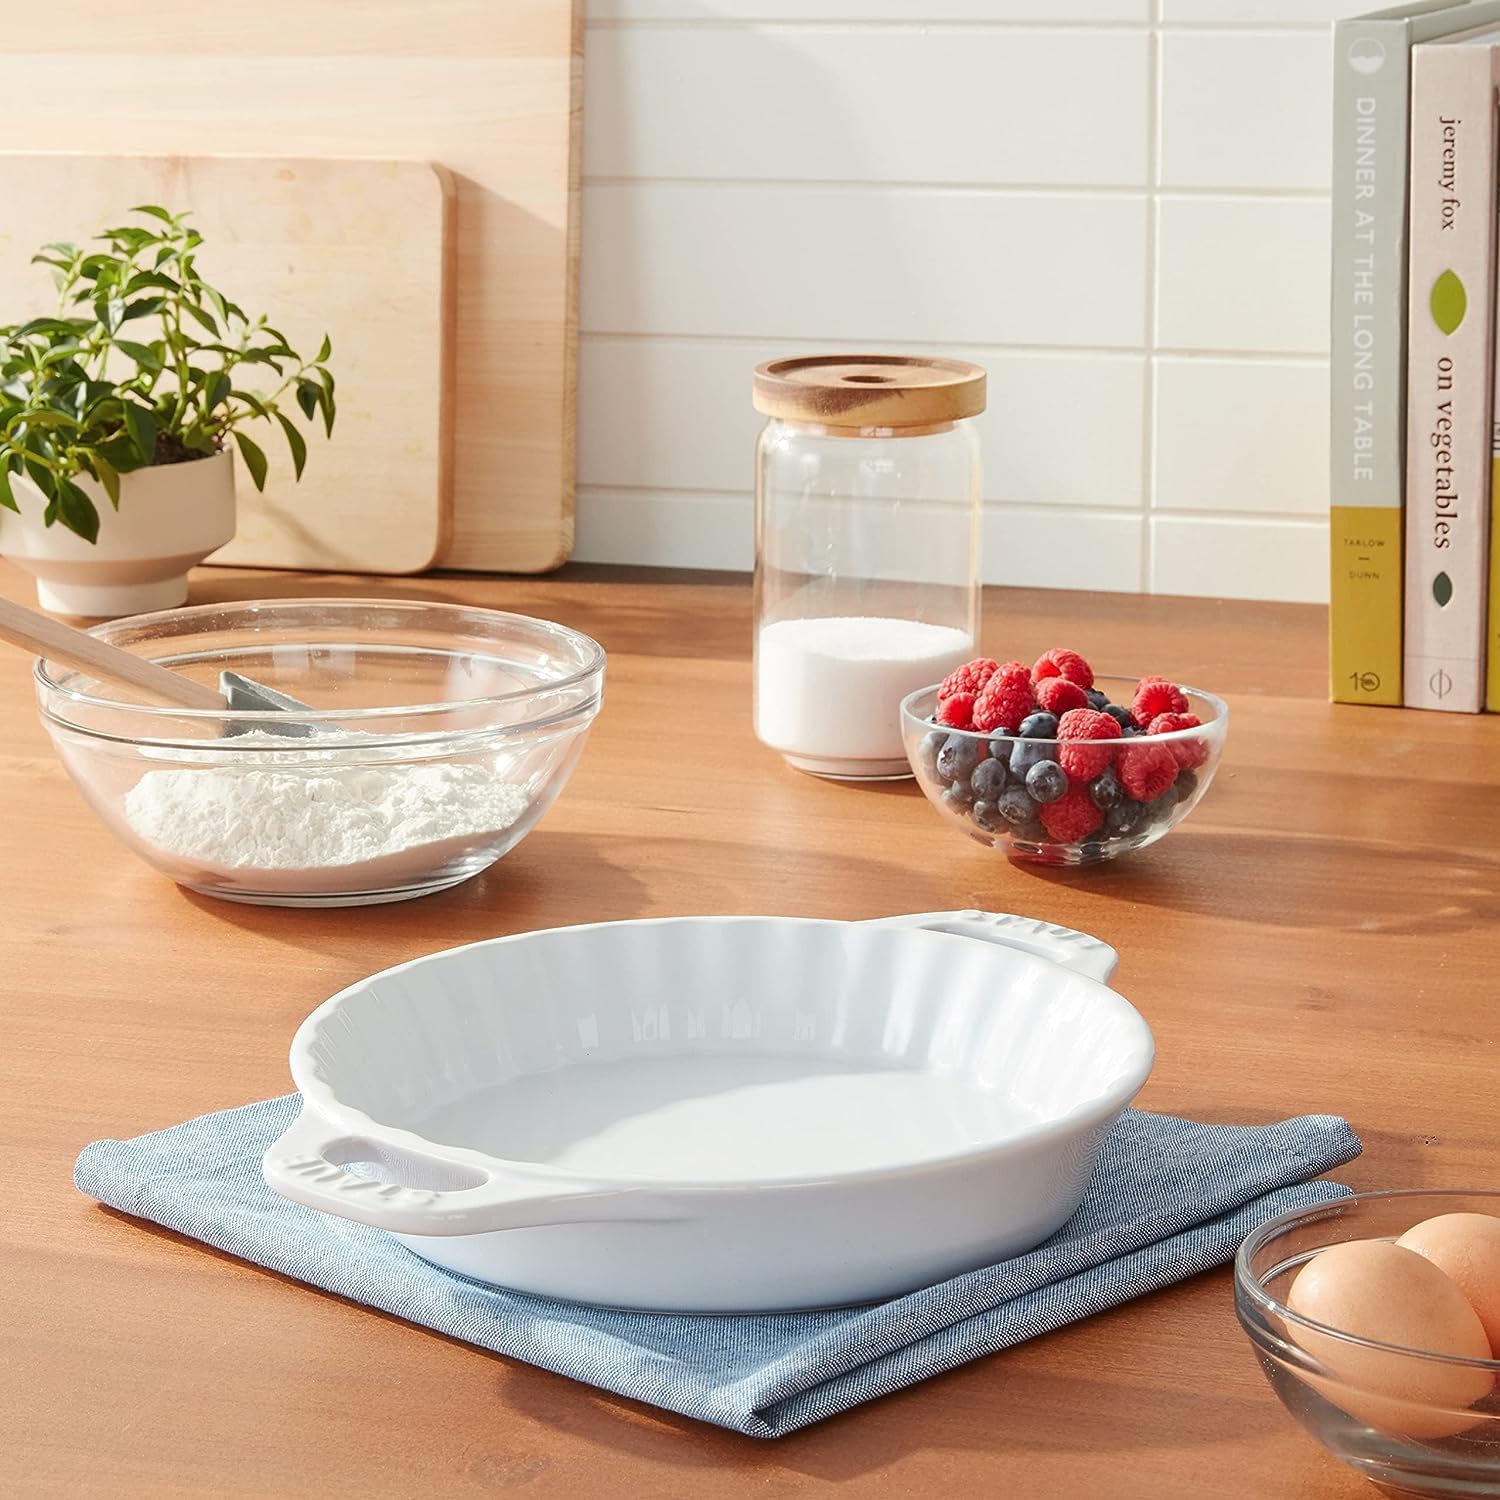 STAUB Ceramics Bakeware-Pie-Pans Dish, 9-inch, White